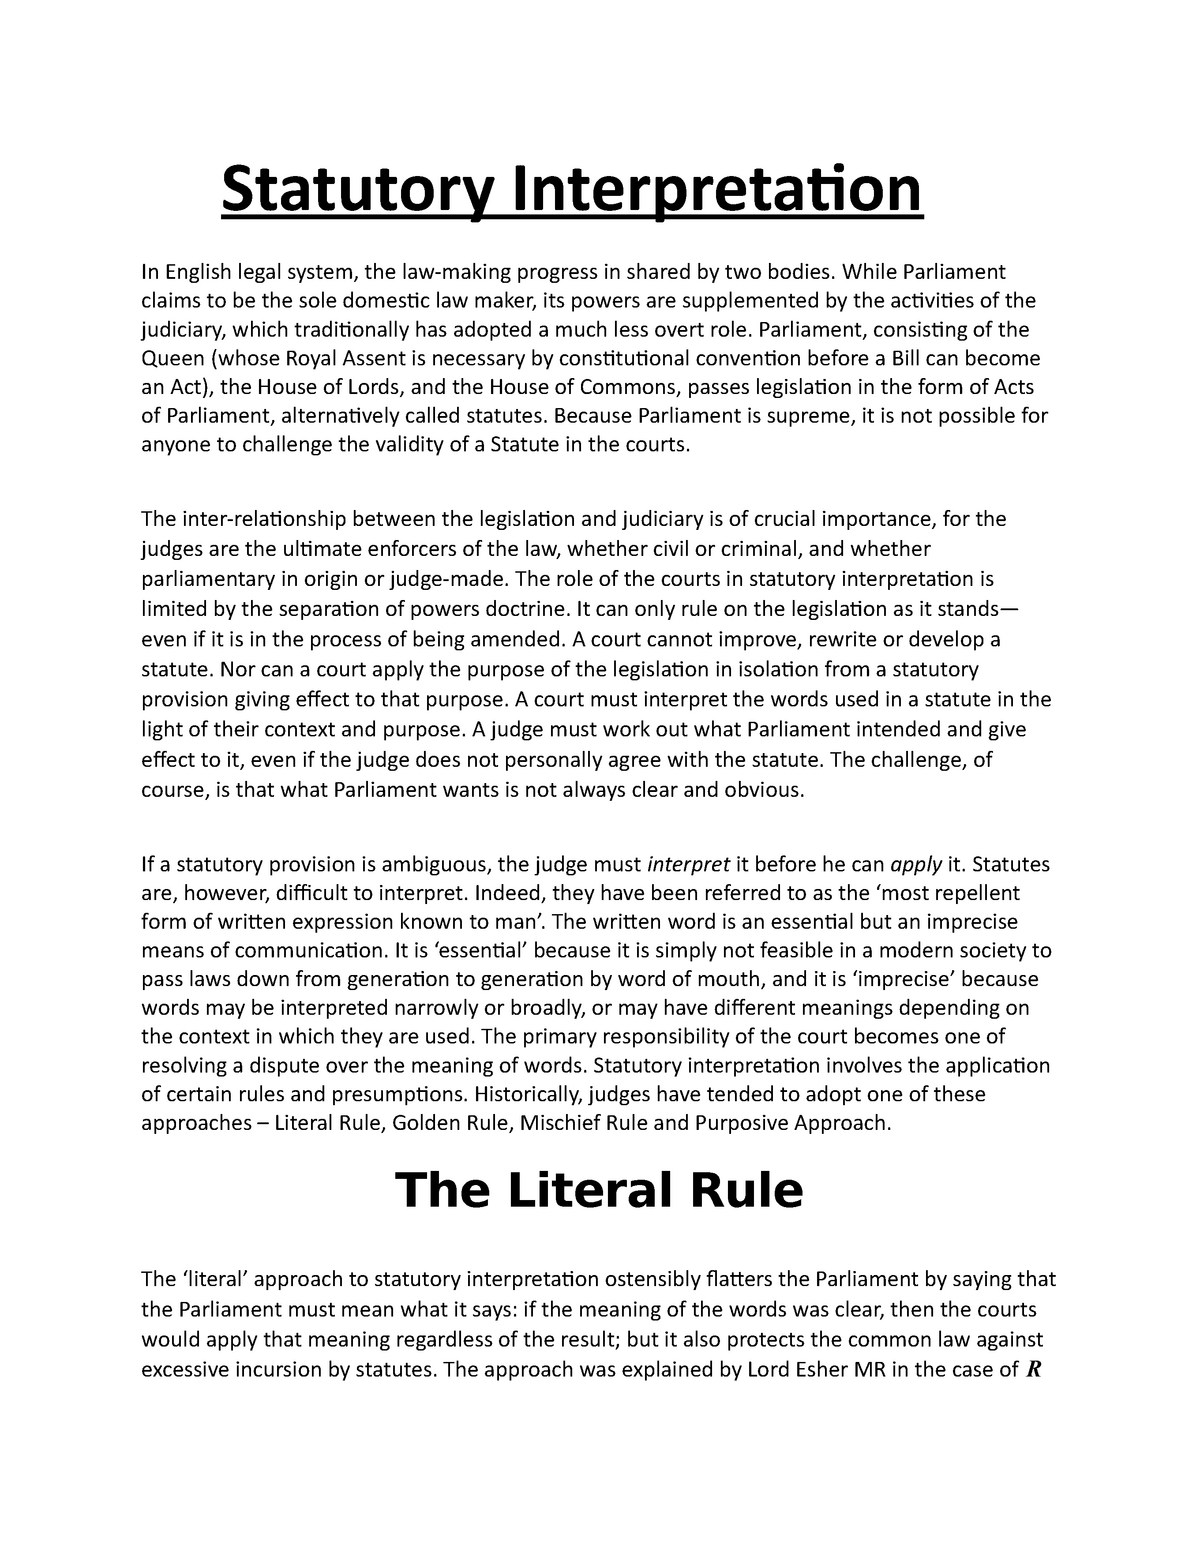 essay on statutory interpretation in uk